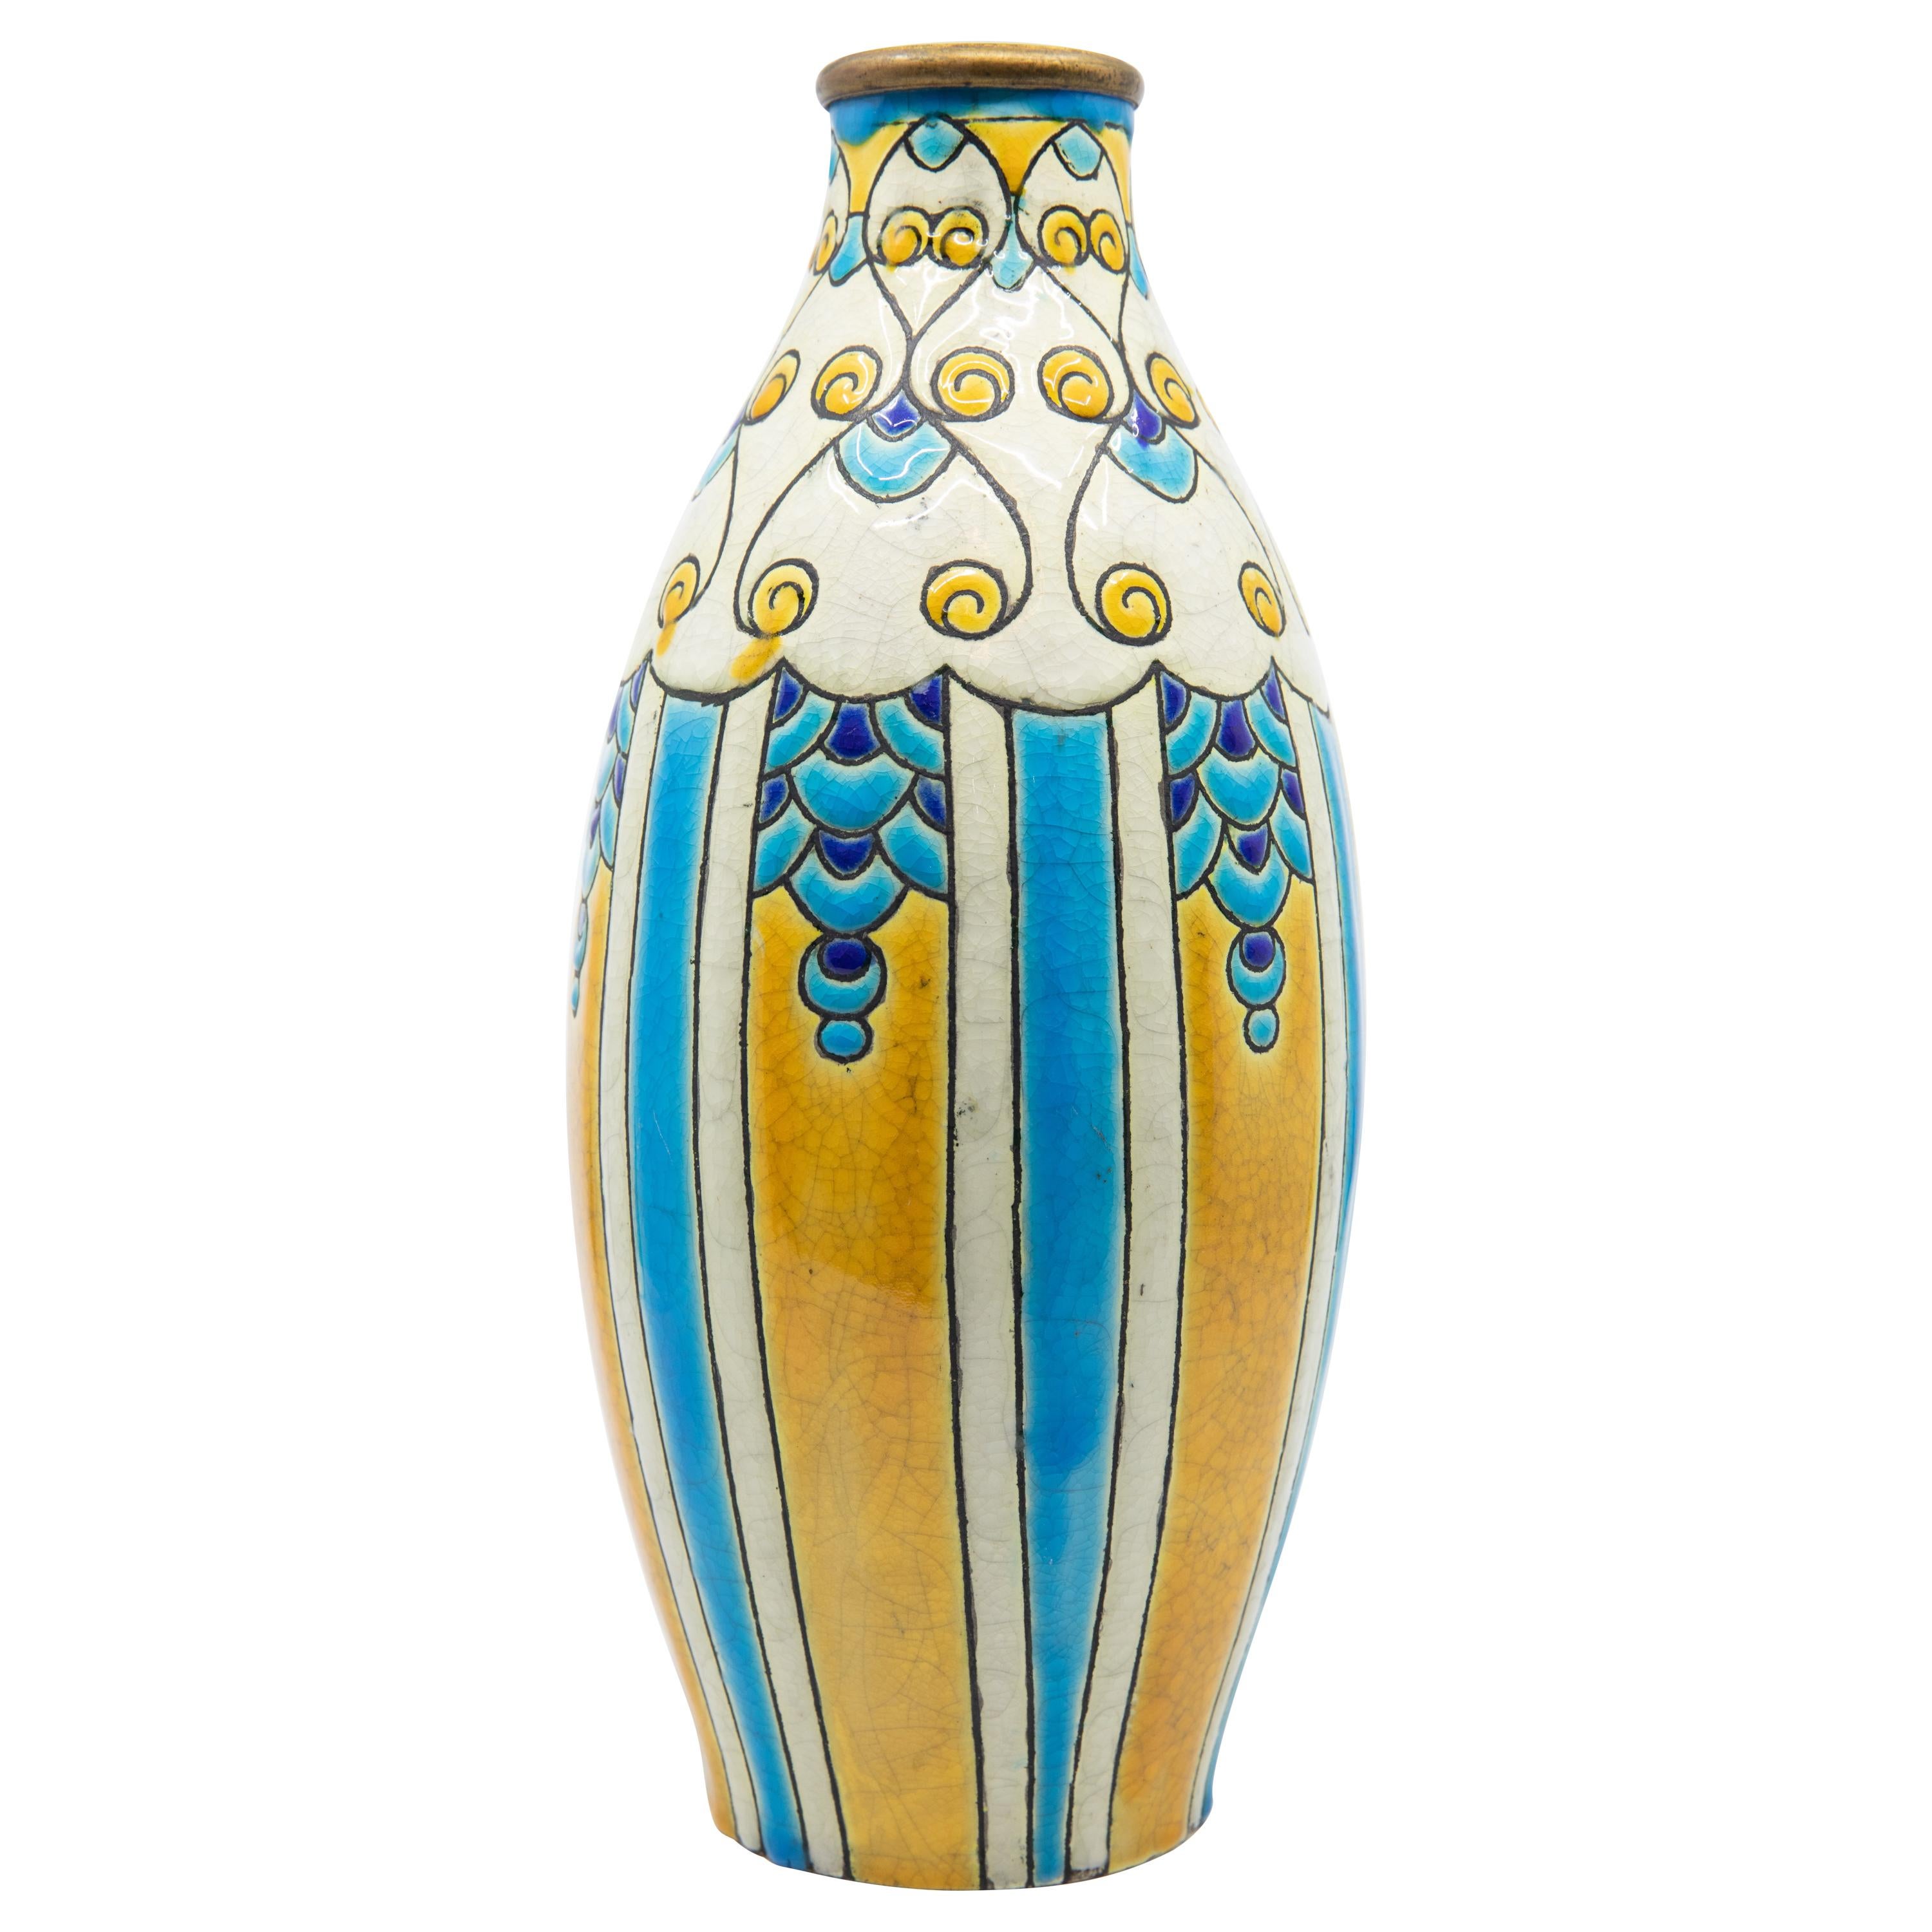 Charles Catteau for Boch Freres Enameled Art Deco Ceramic Vase, circa 1924